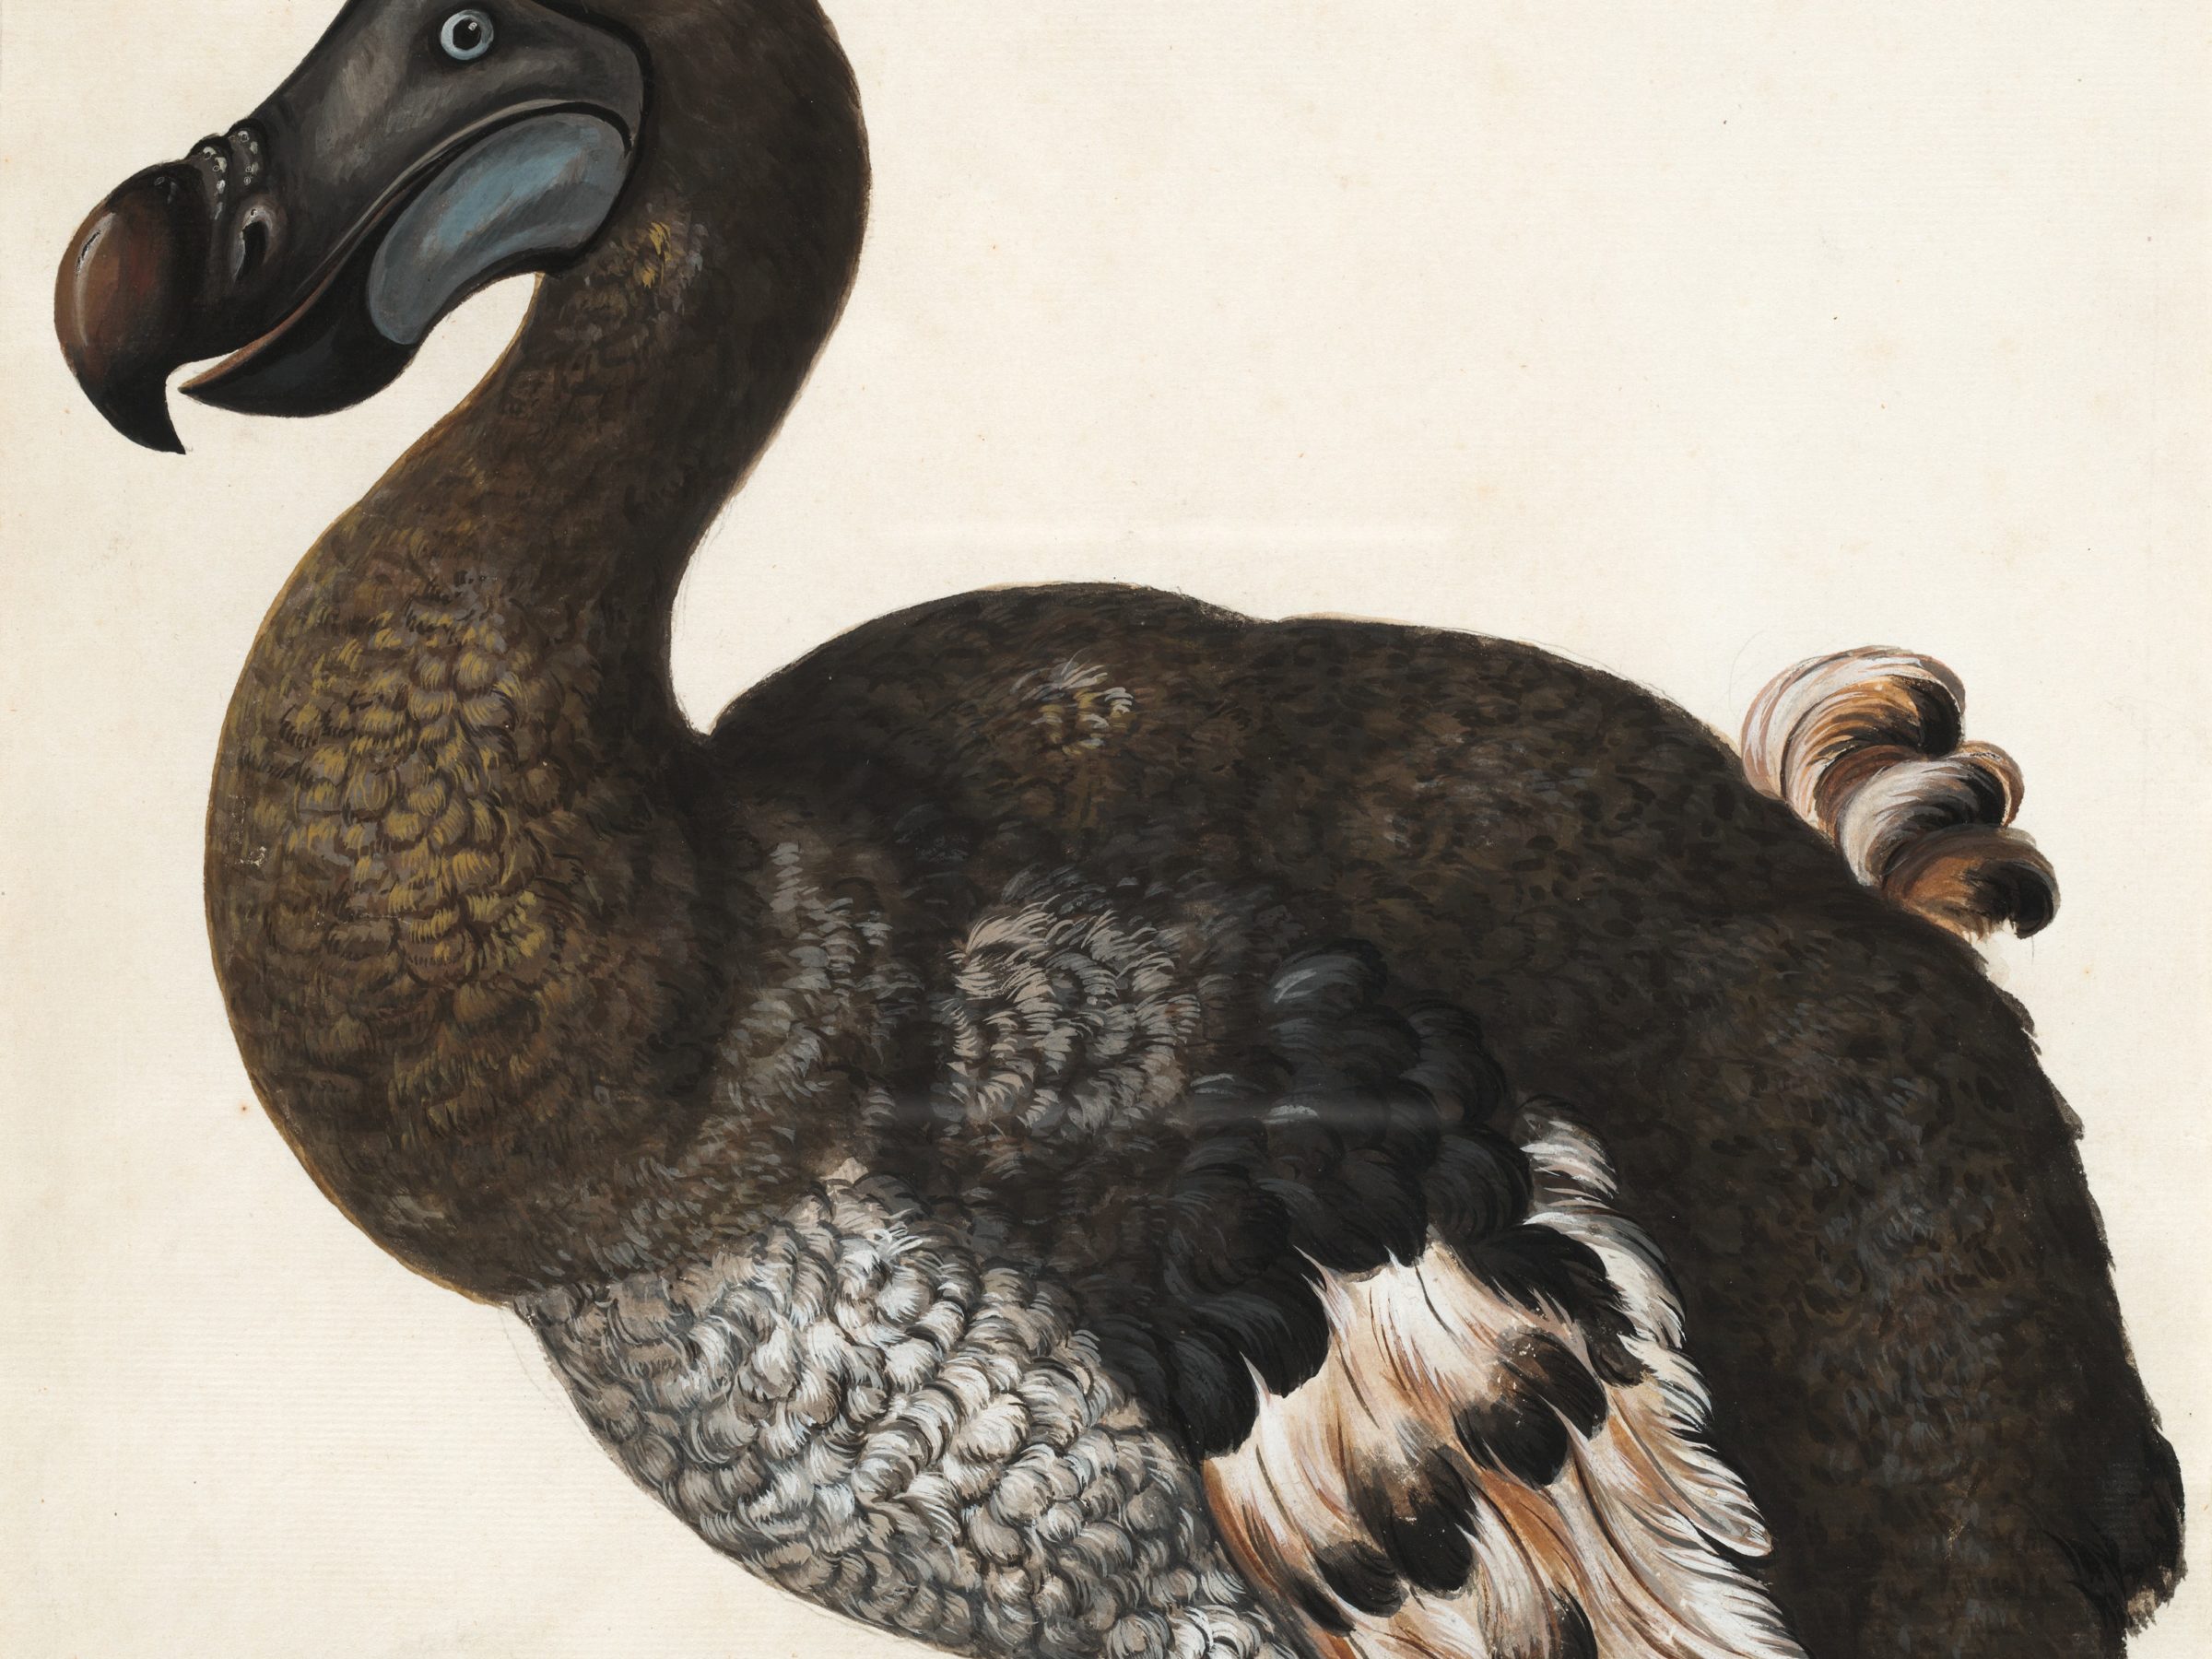 Painting of the extinct Dodo bird on Mauritius Island